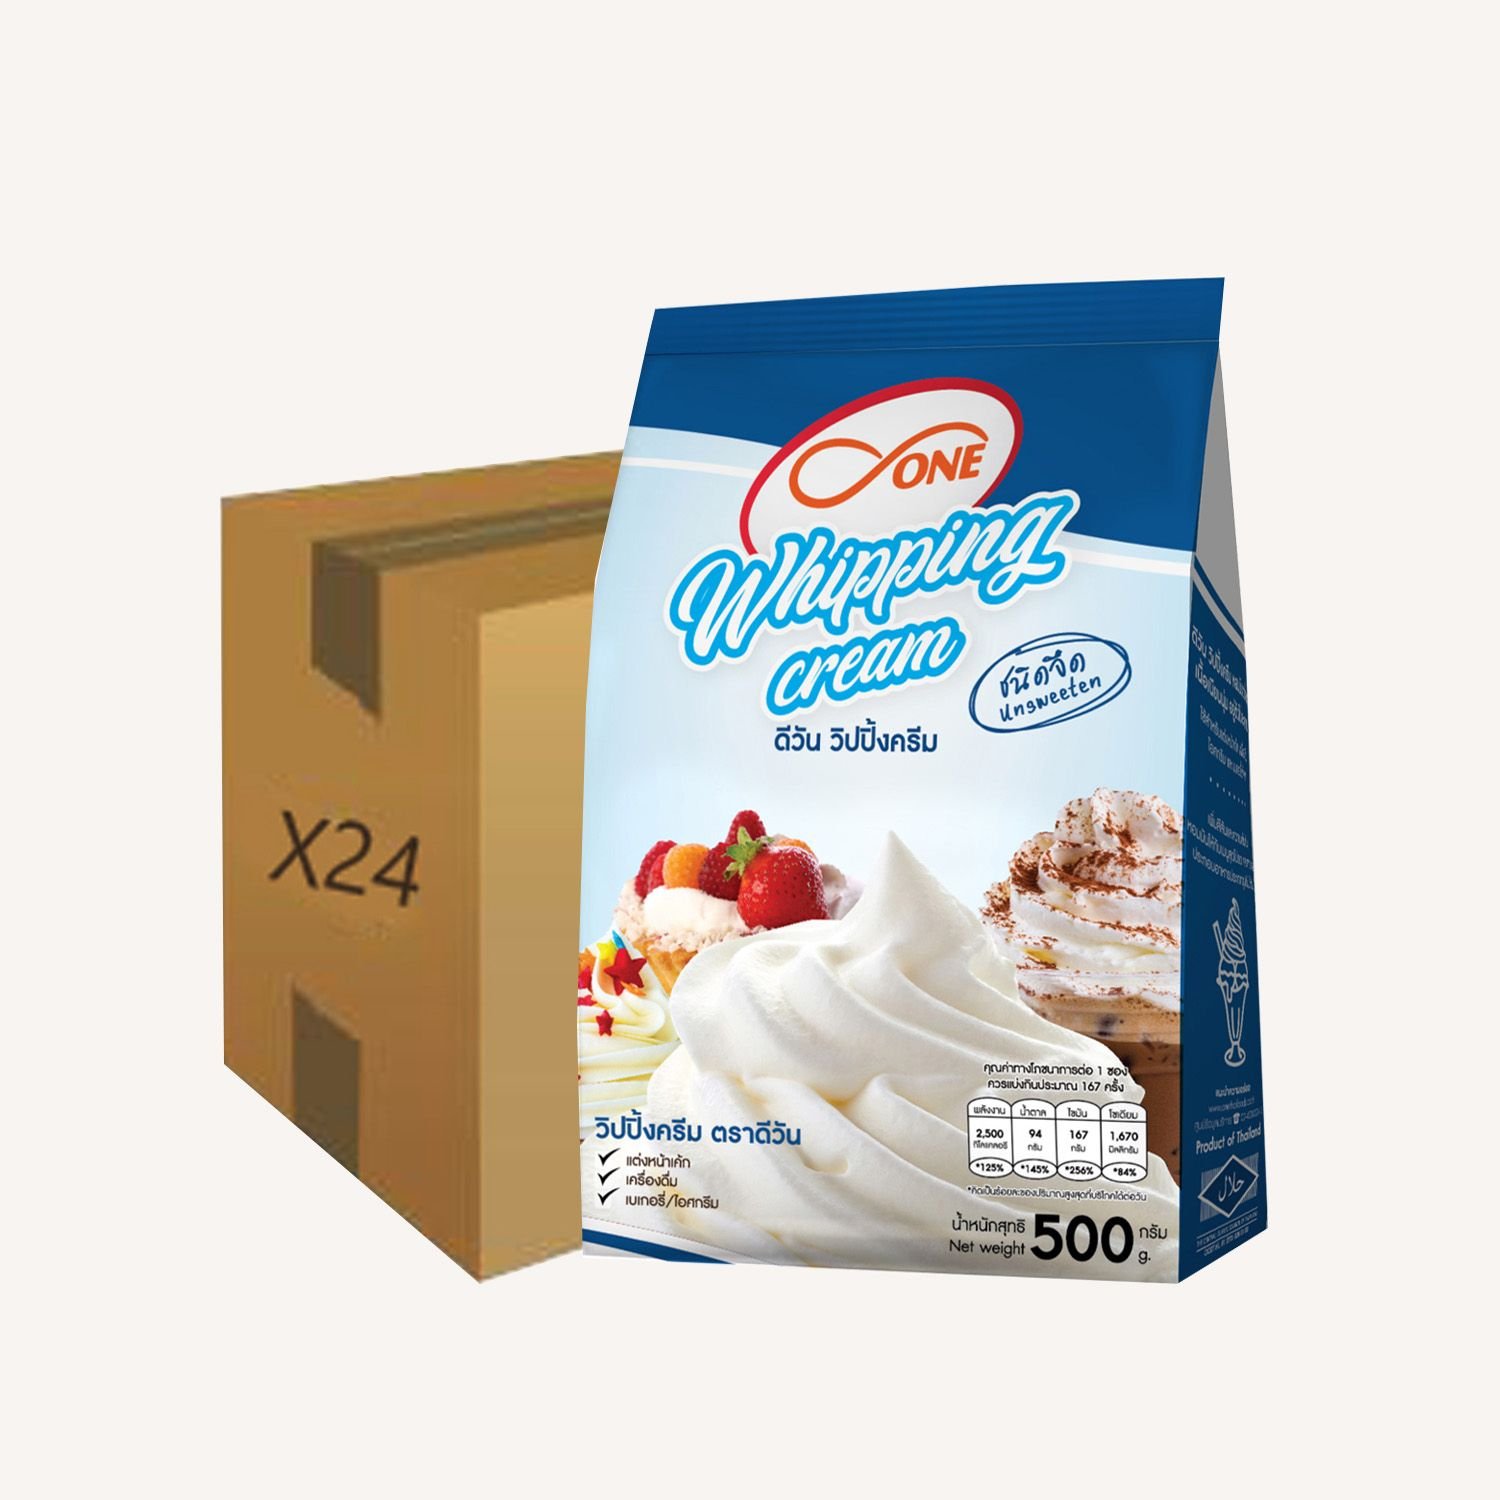 Tiramisu Dessert and Cake Cream Powder Mix, 3.5 oz (100g) – Parthenon Foods